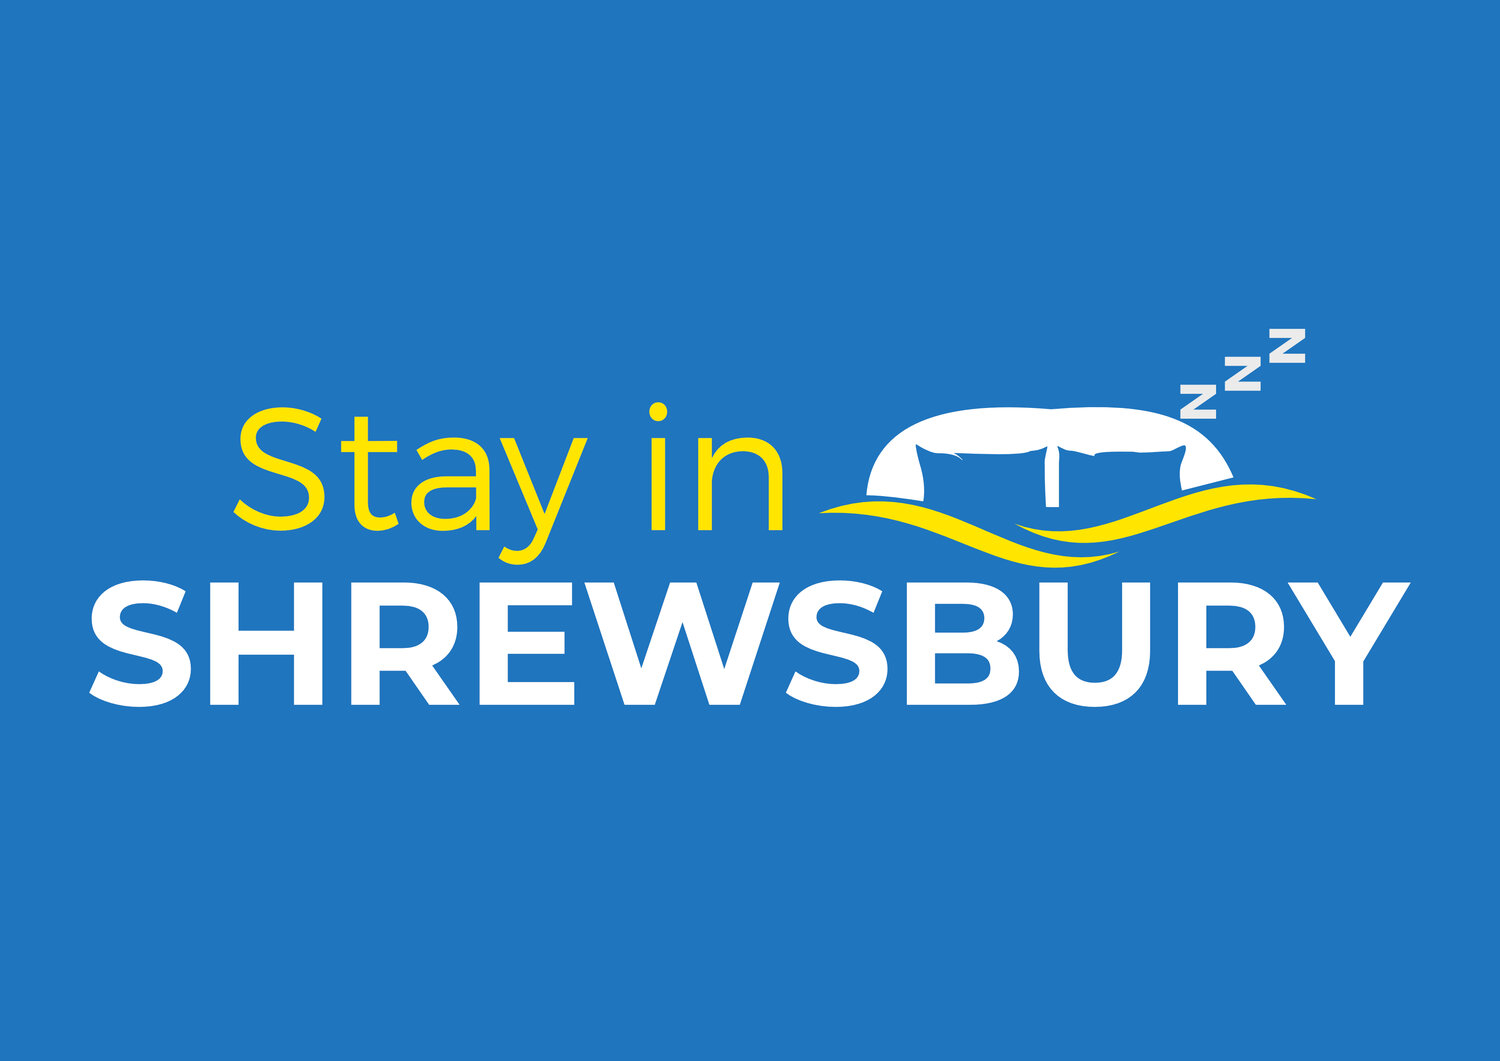 Stay in Shrewsbury. Short term holiday and working accommodation in Shrewsbury